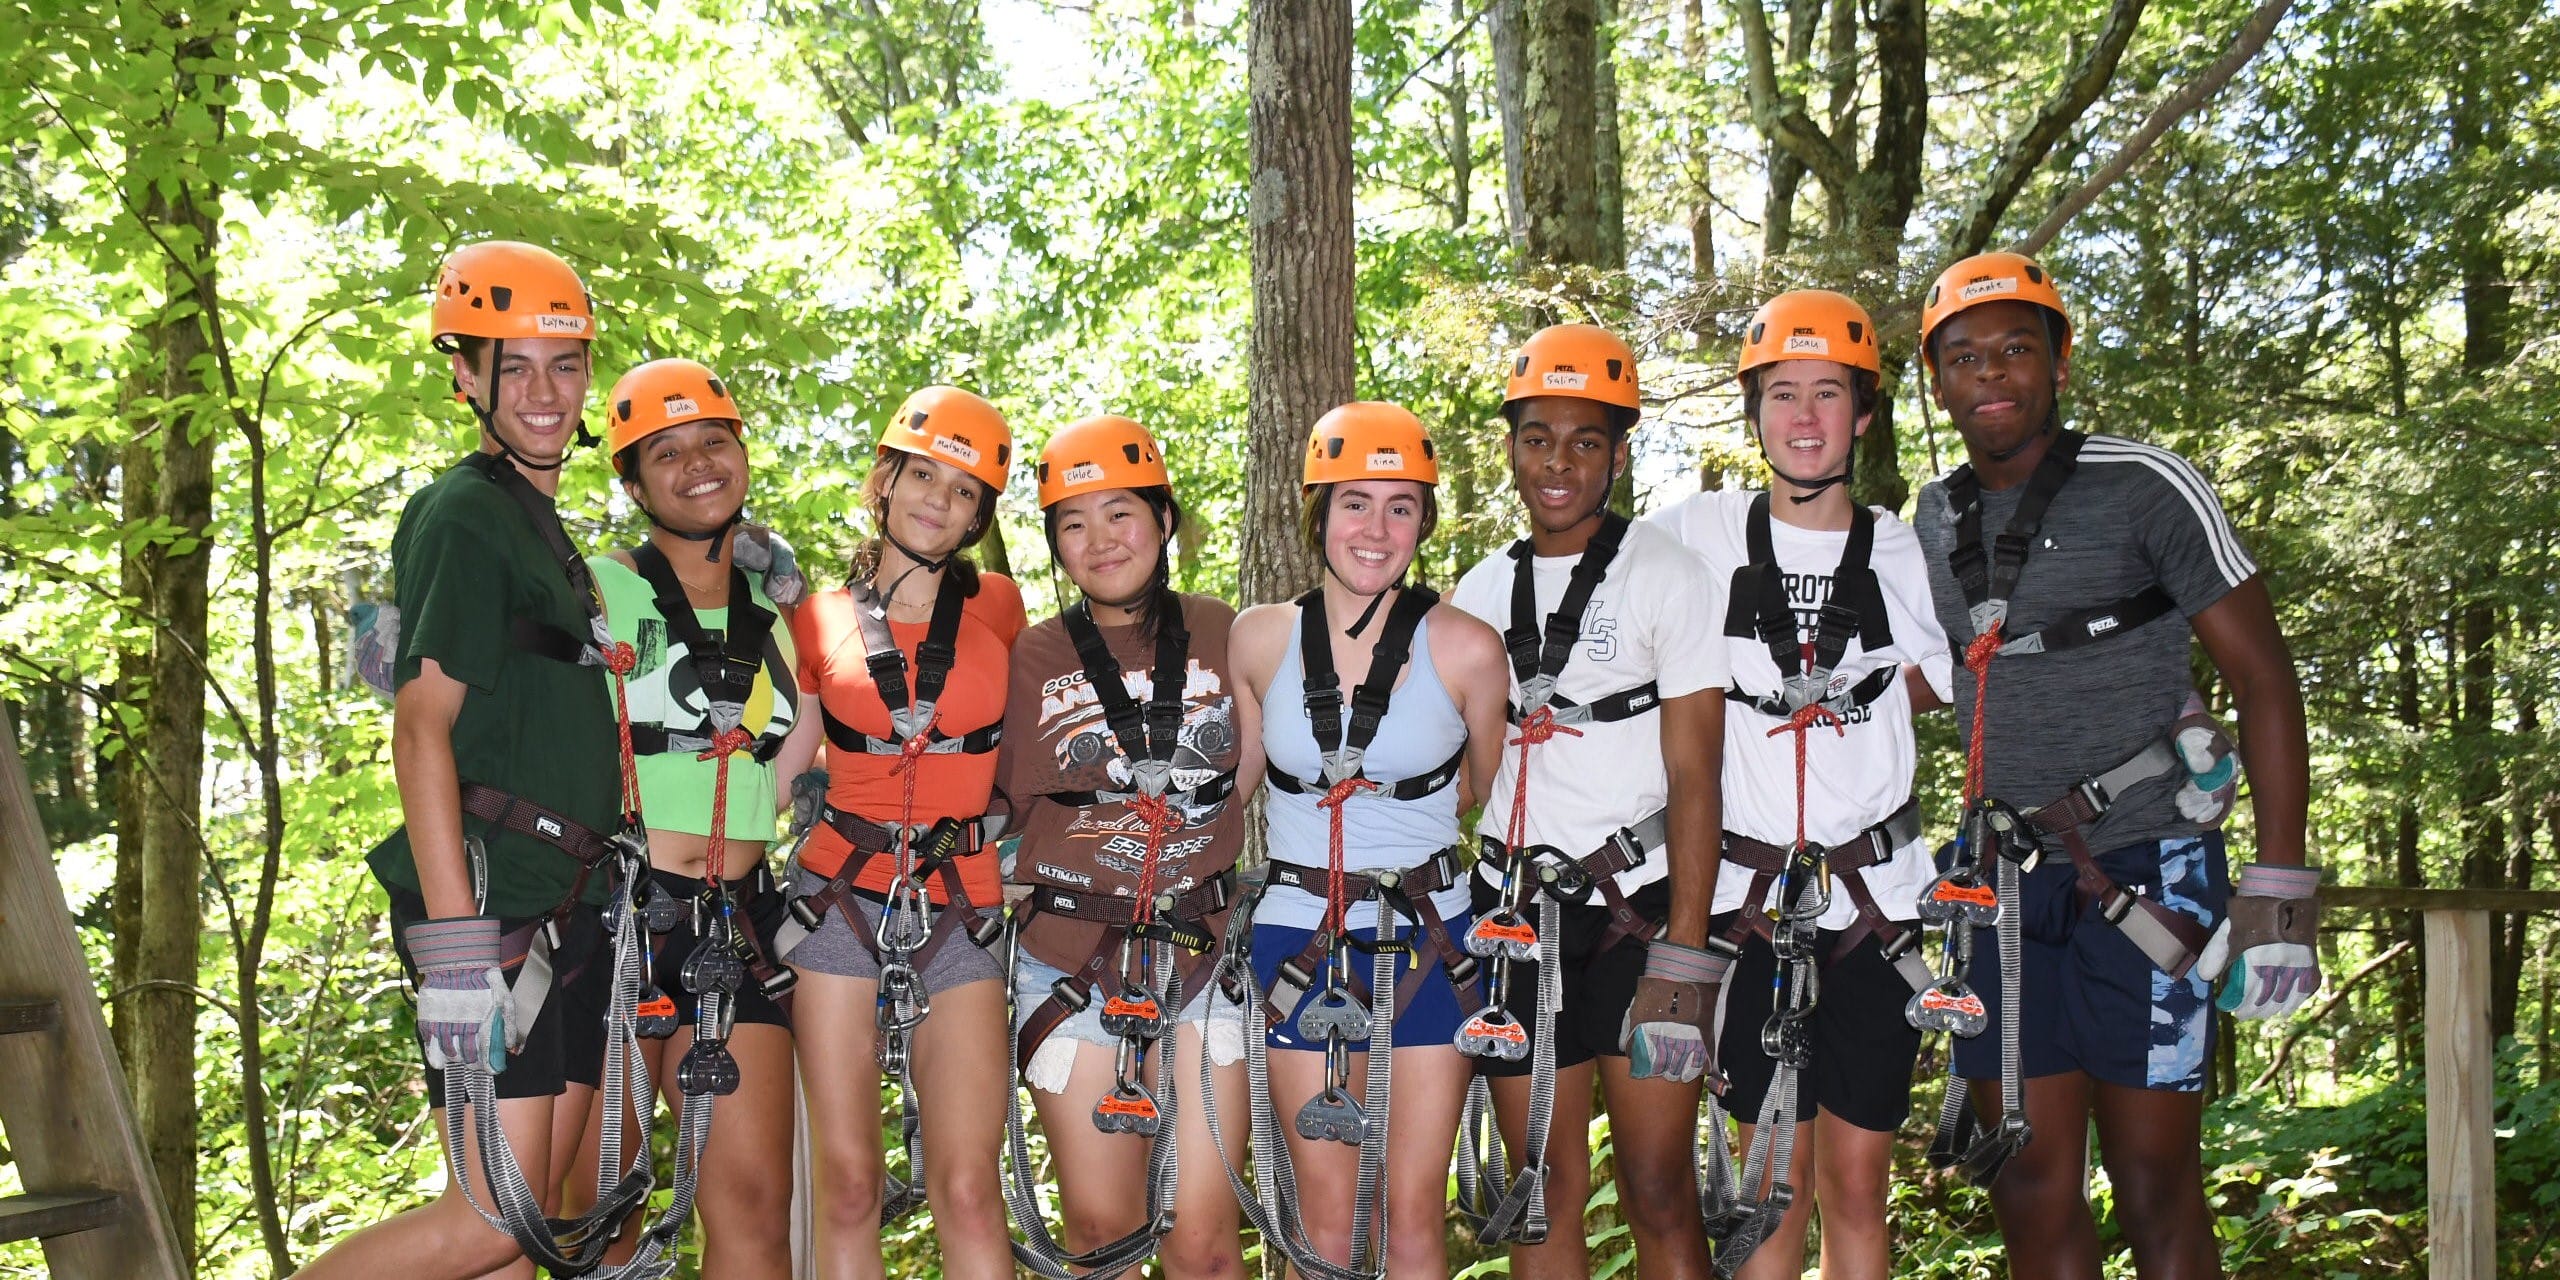 group of high school students in zipline gear smiling on zipline platform